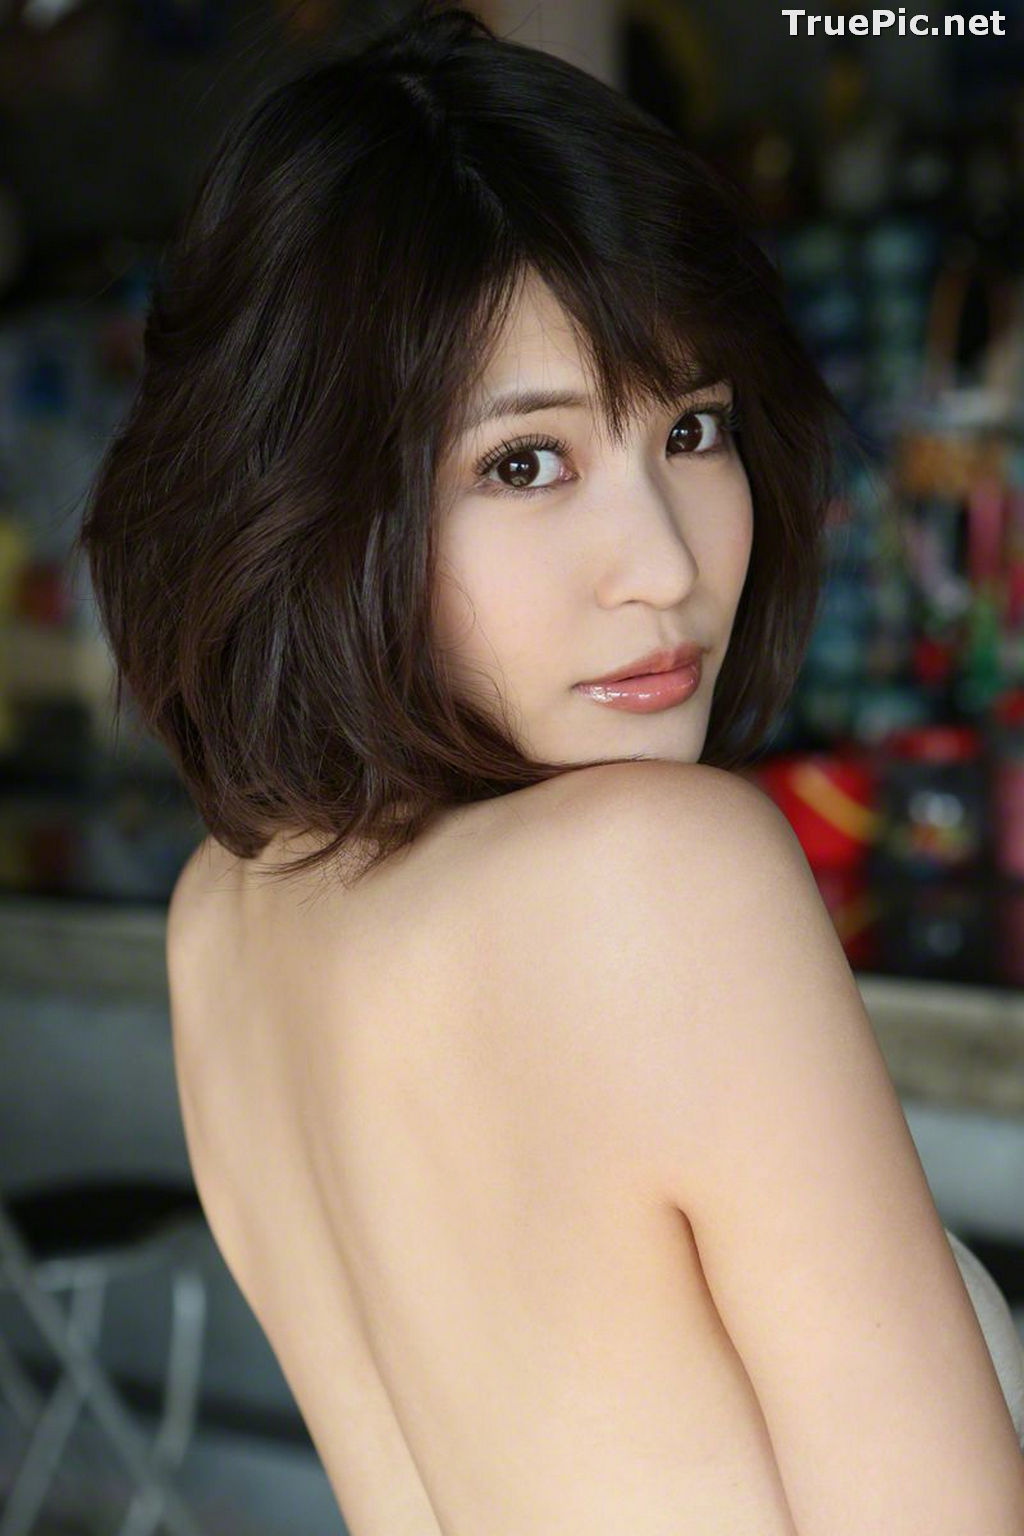 Image Wanibooks NO.122 - Japanese Gravure Idol and Actress - Asuka Kishi - TruePic.net - Picture-149